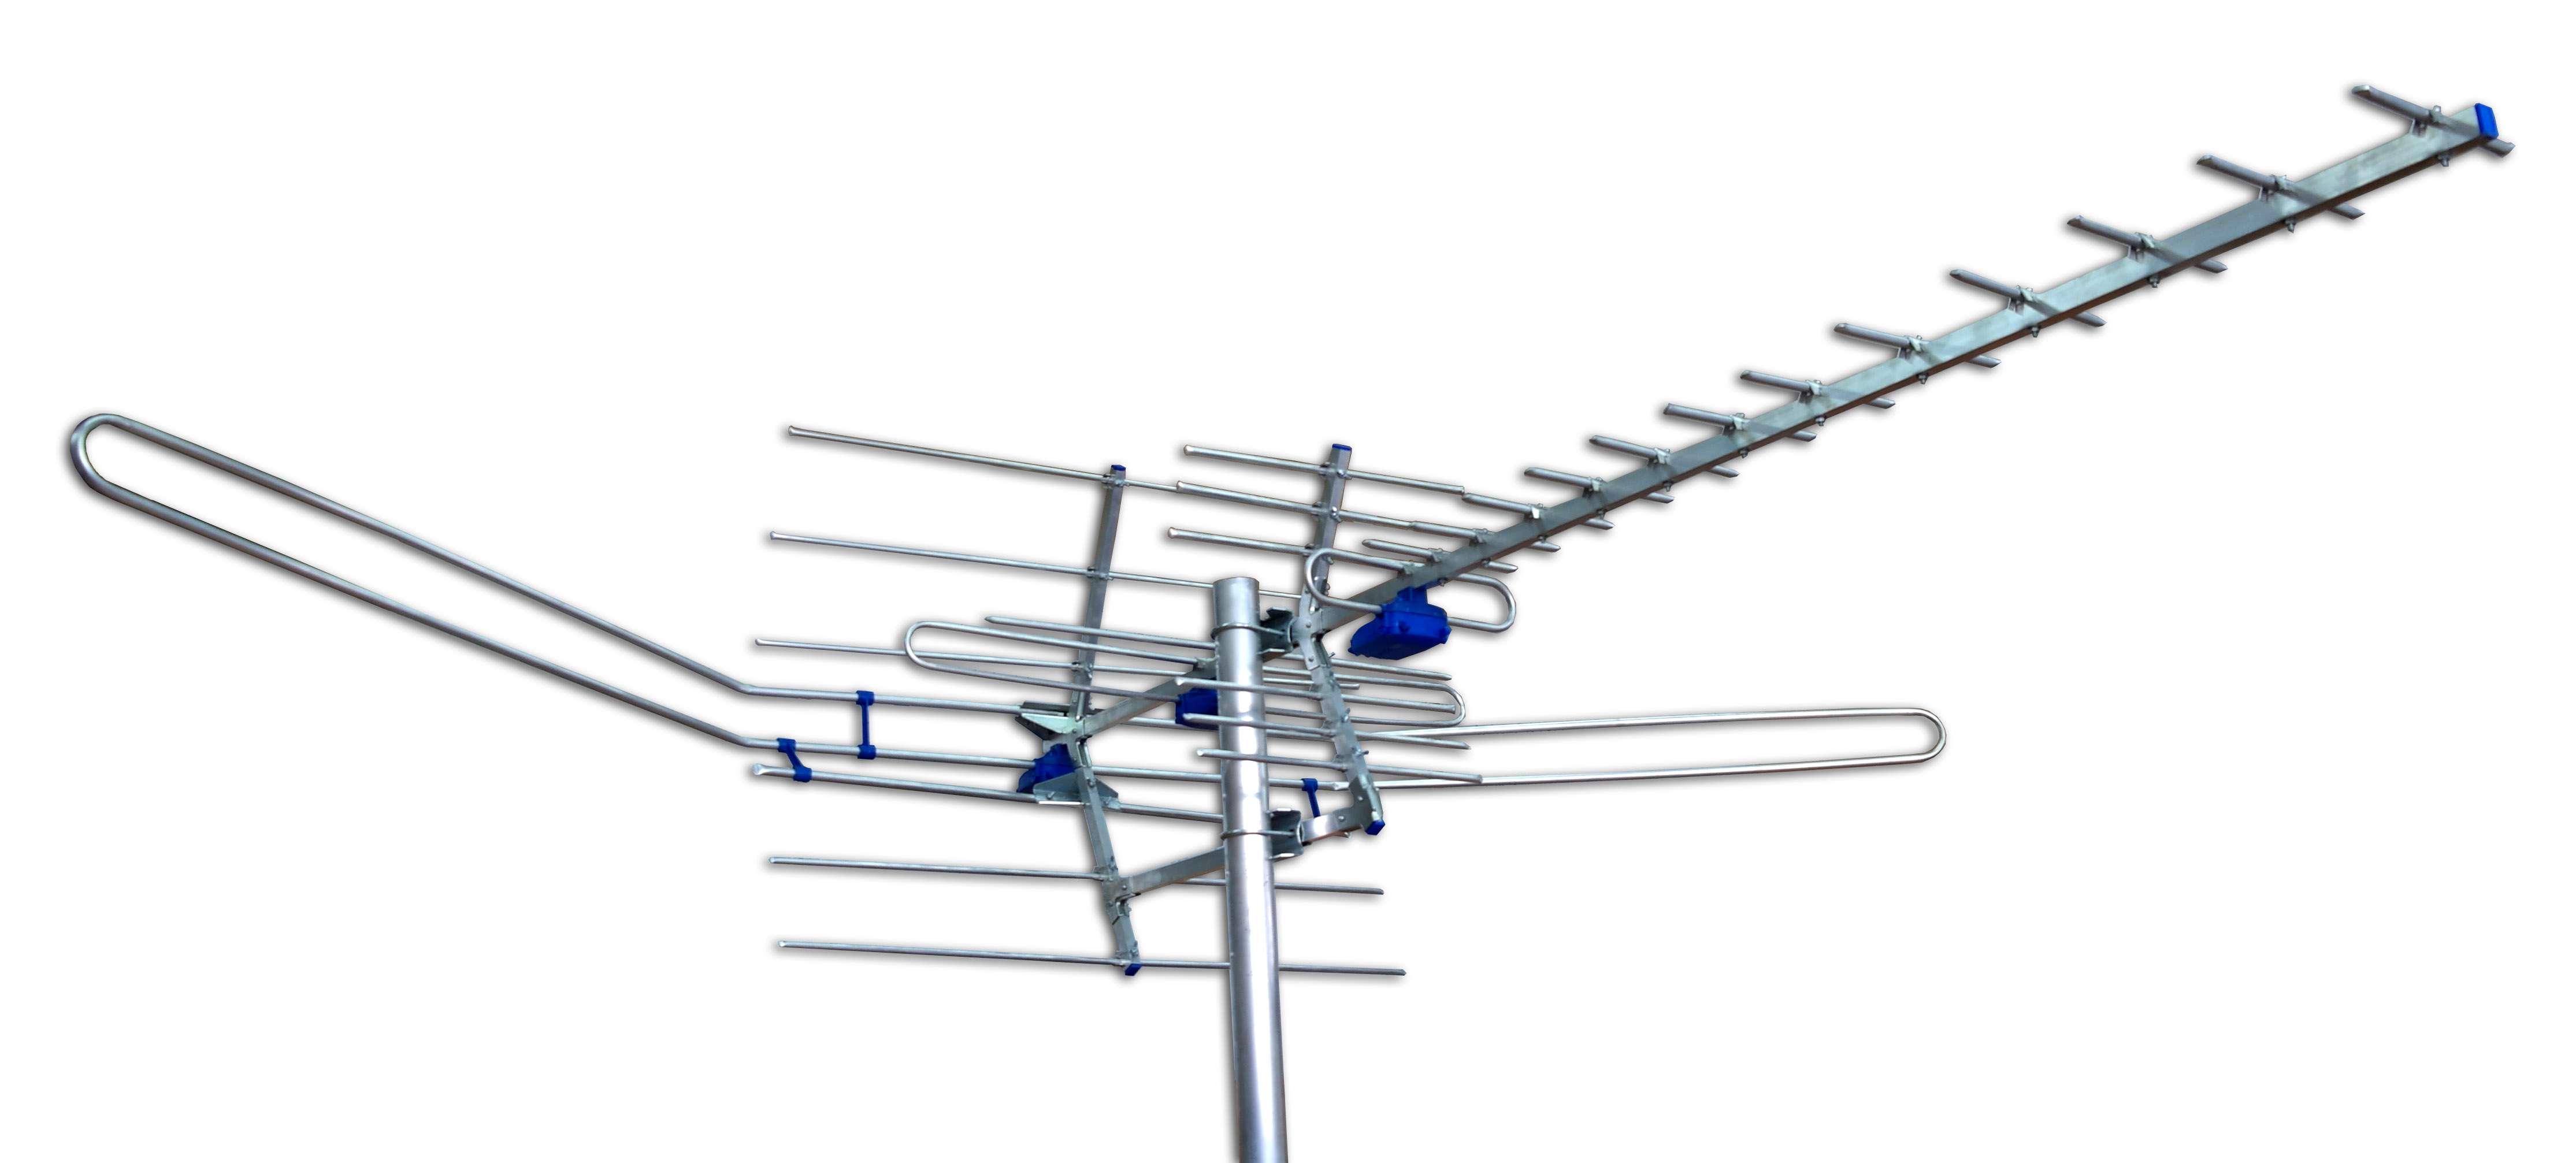 Как правильно установить антенну для приема цифрового сигнала DVB-T2?